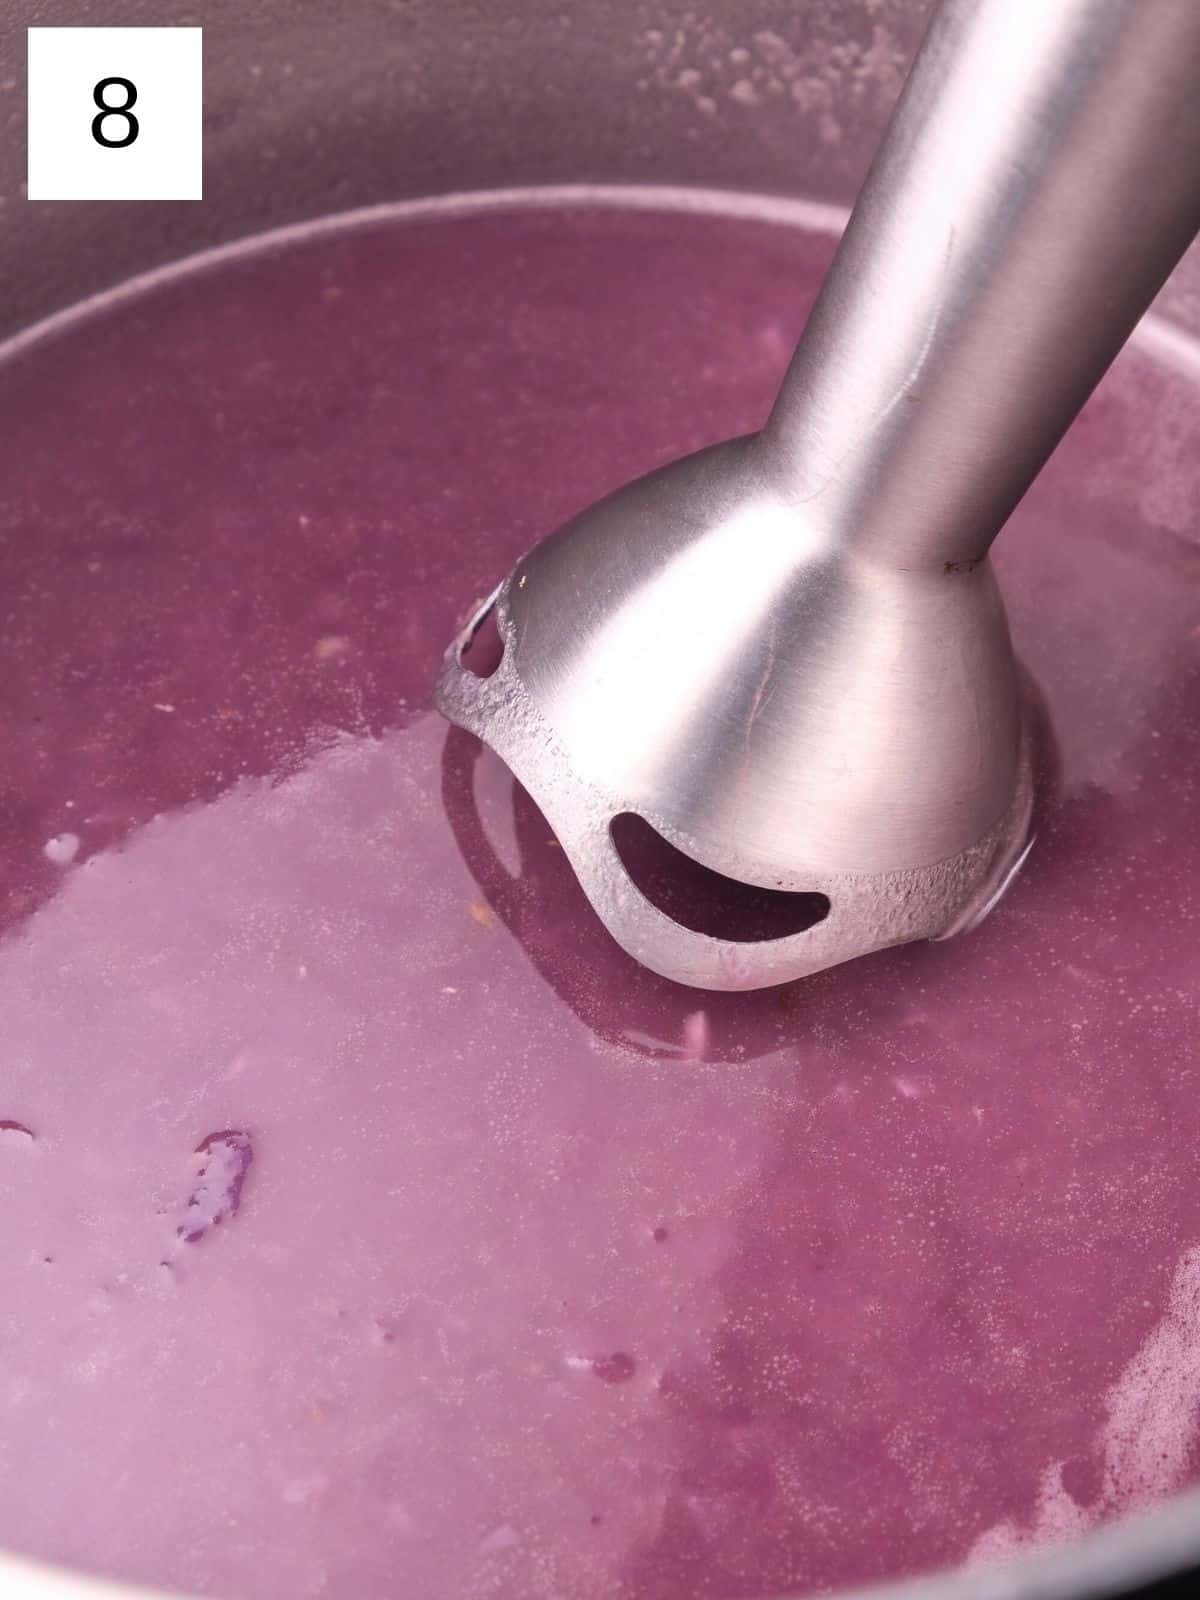 blending the soup using an immersion blender.